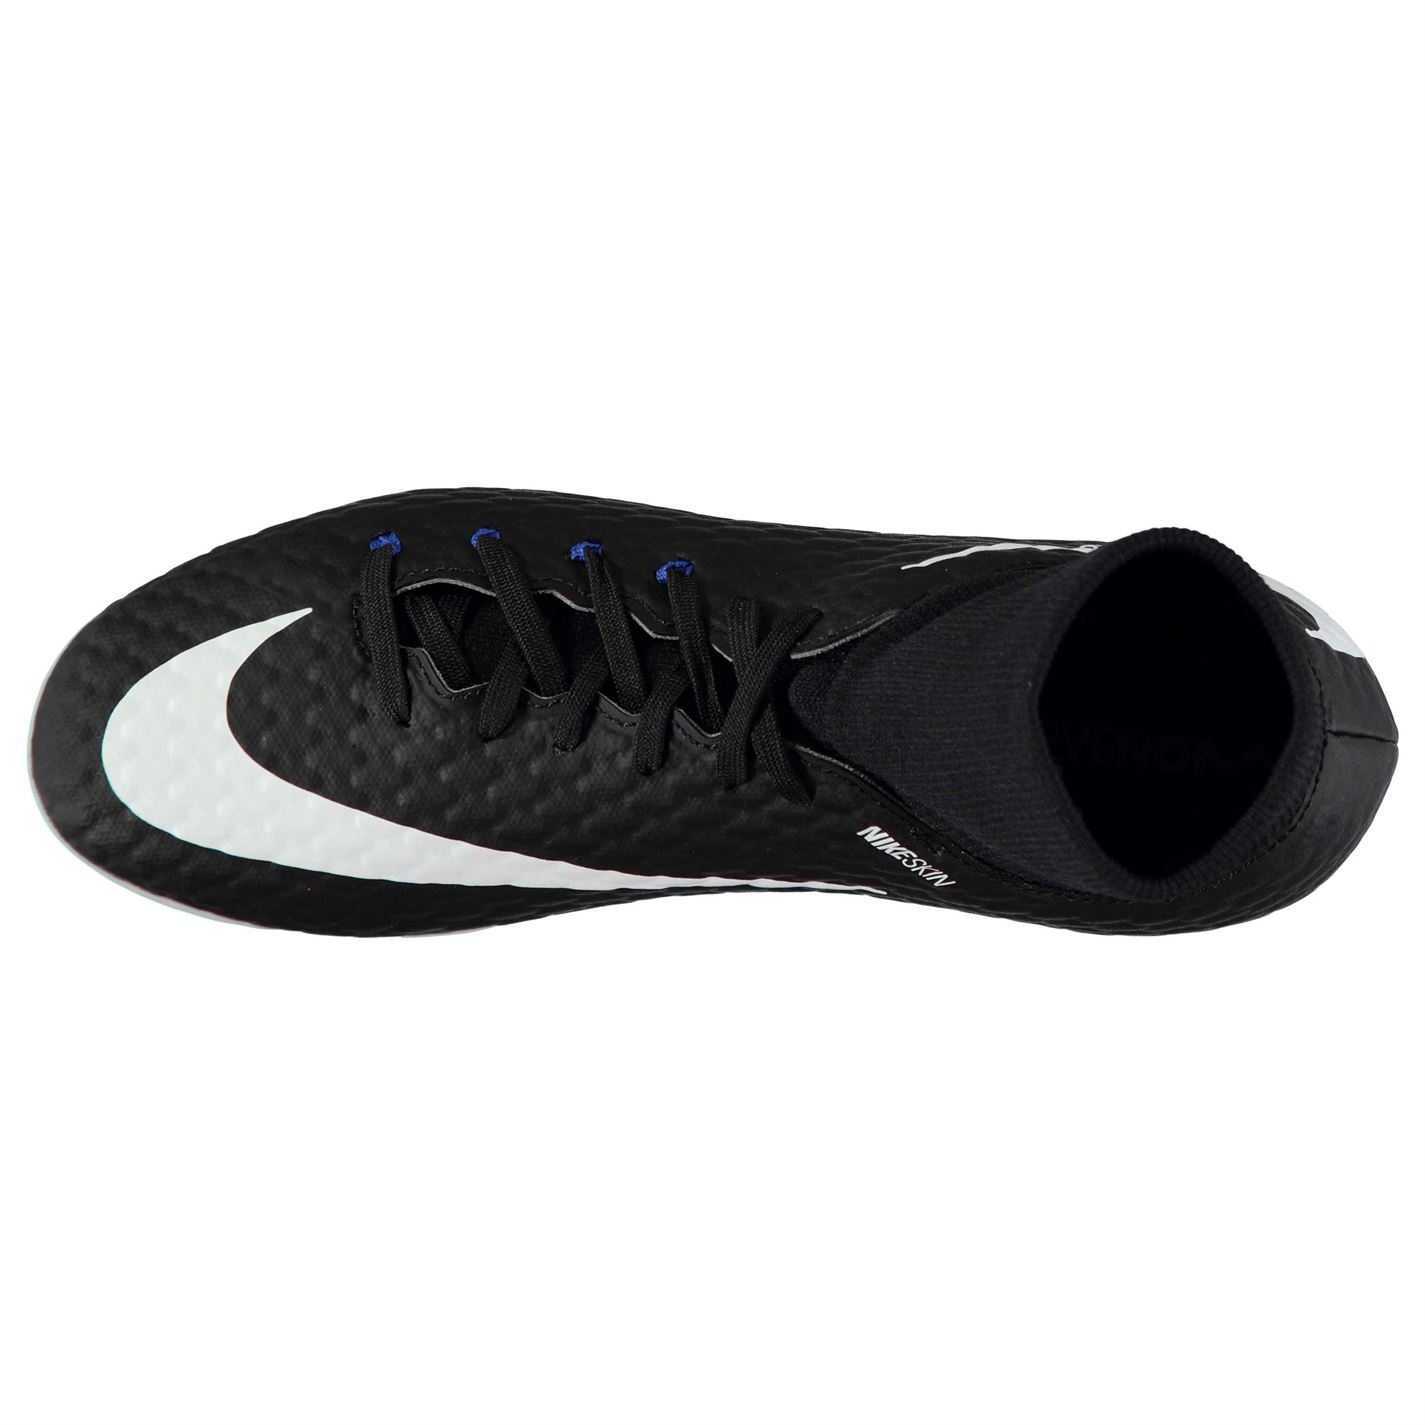 Ghete fotbal Nike Hypervenom Phelon III DF FG 917764-002 barbati